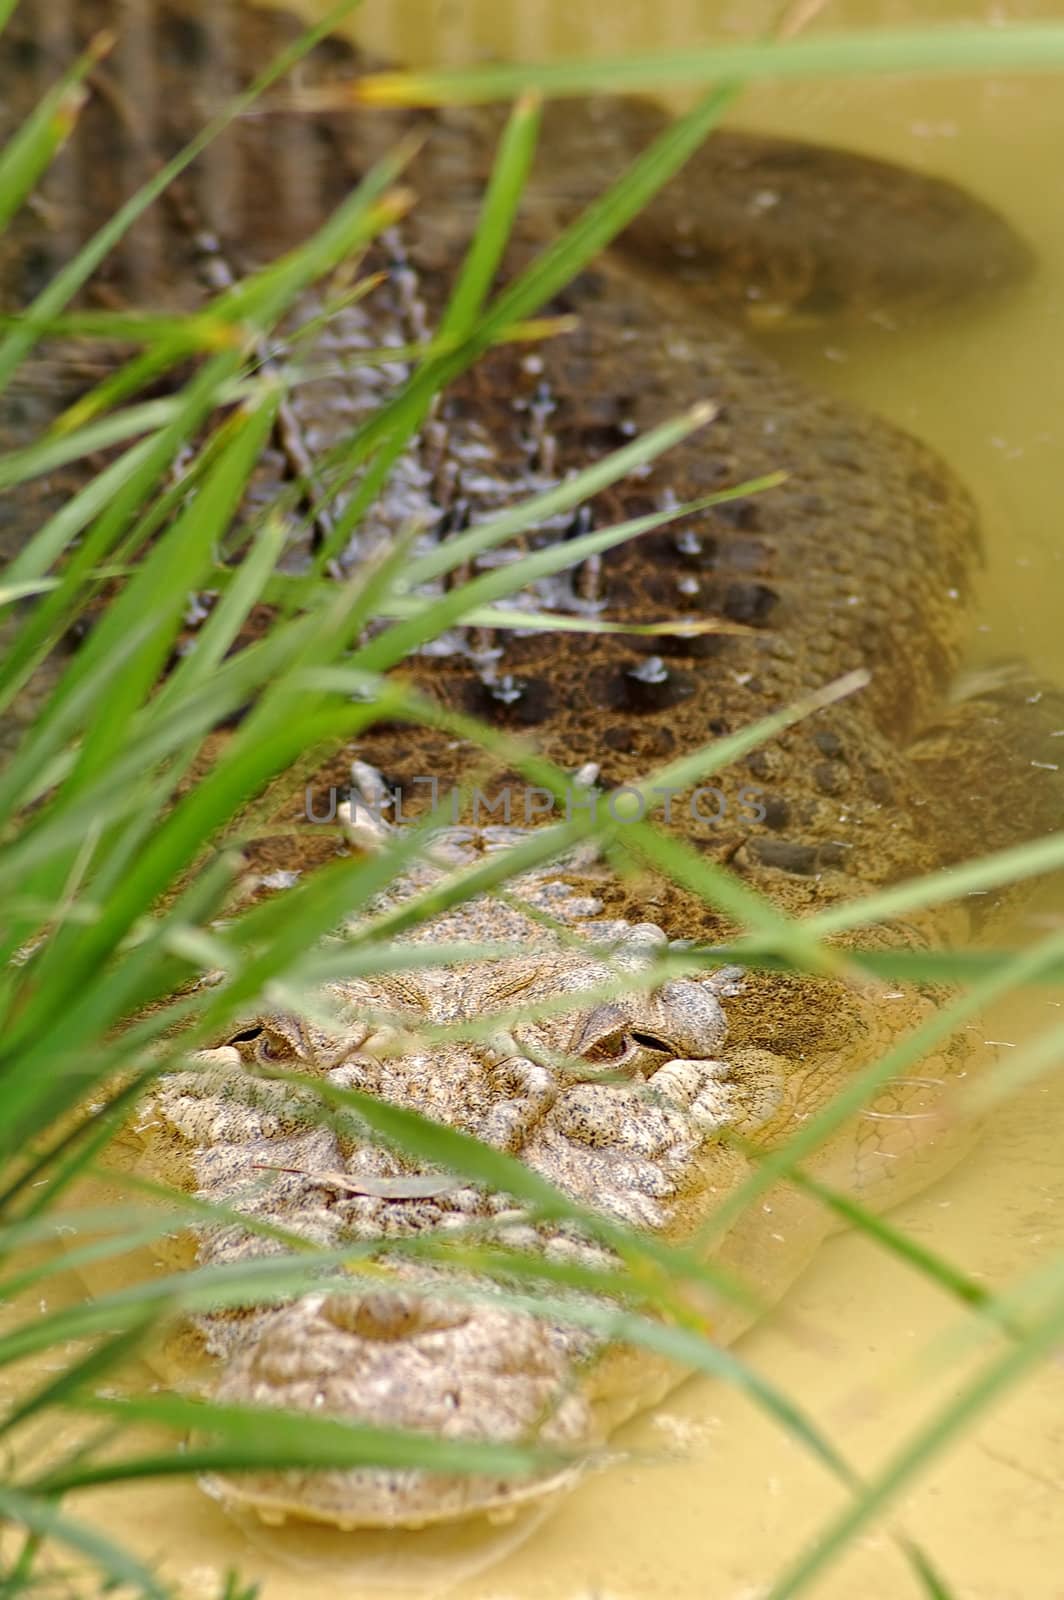 big salt-water crocodile hiding behind grass in yellow pond